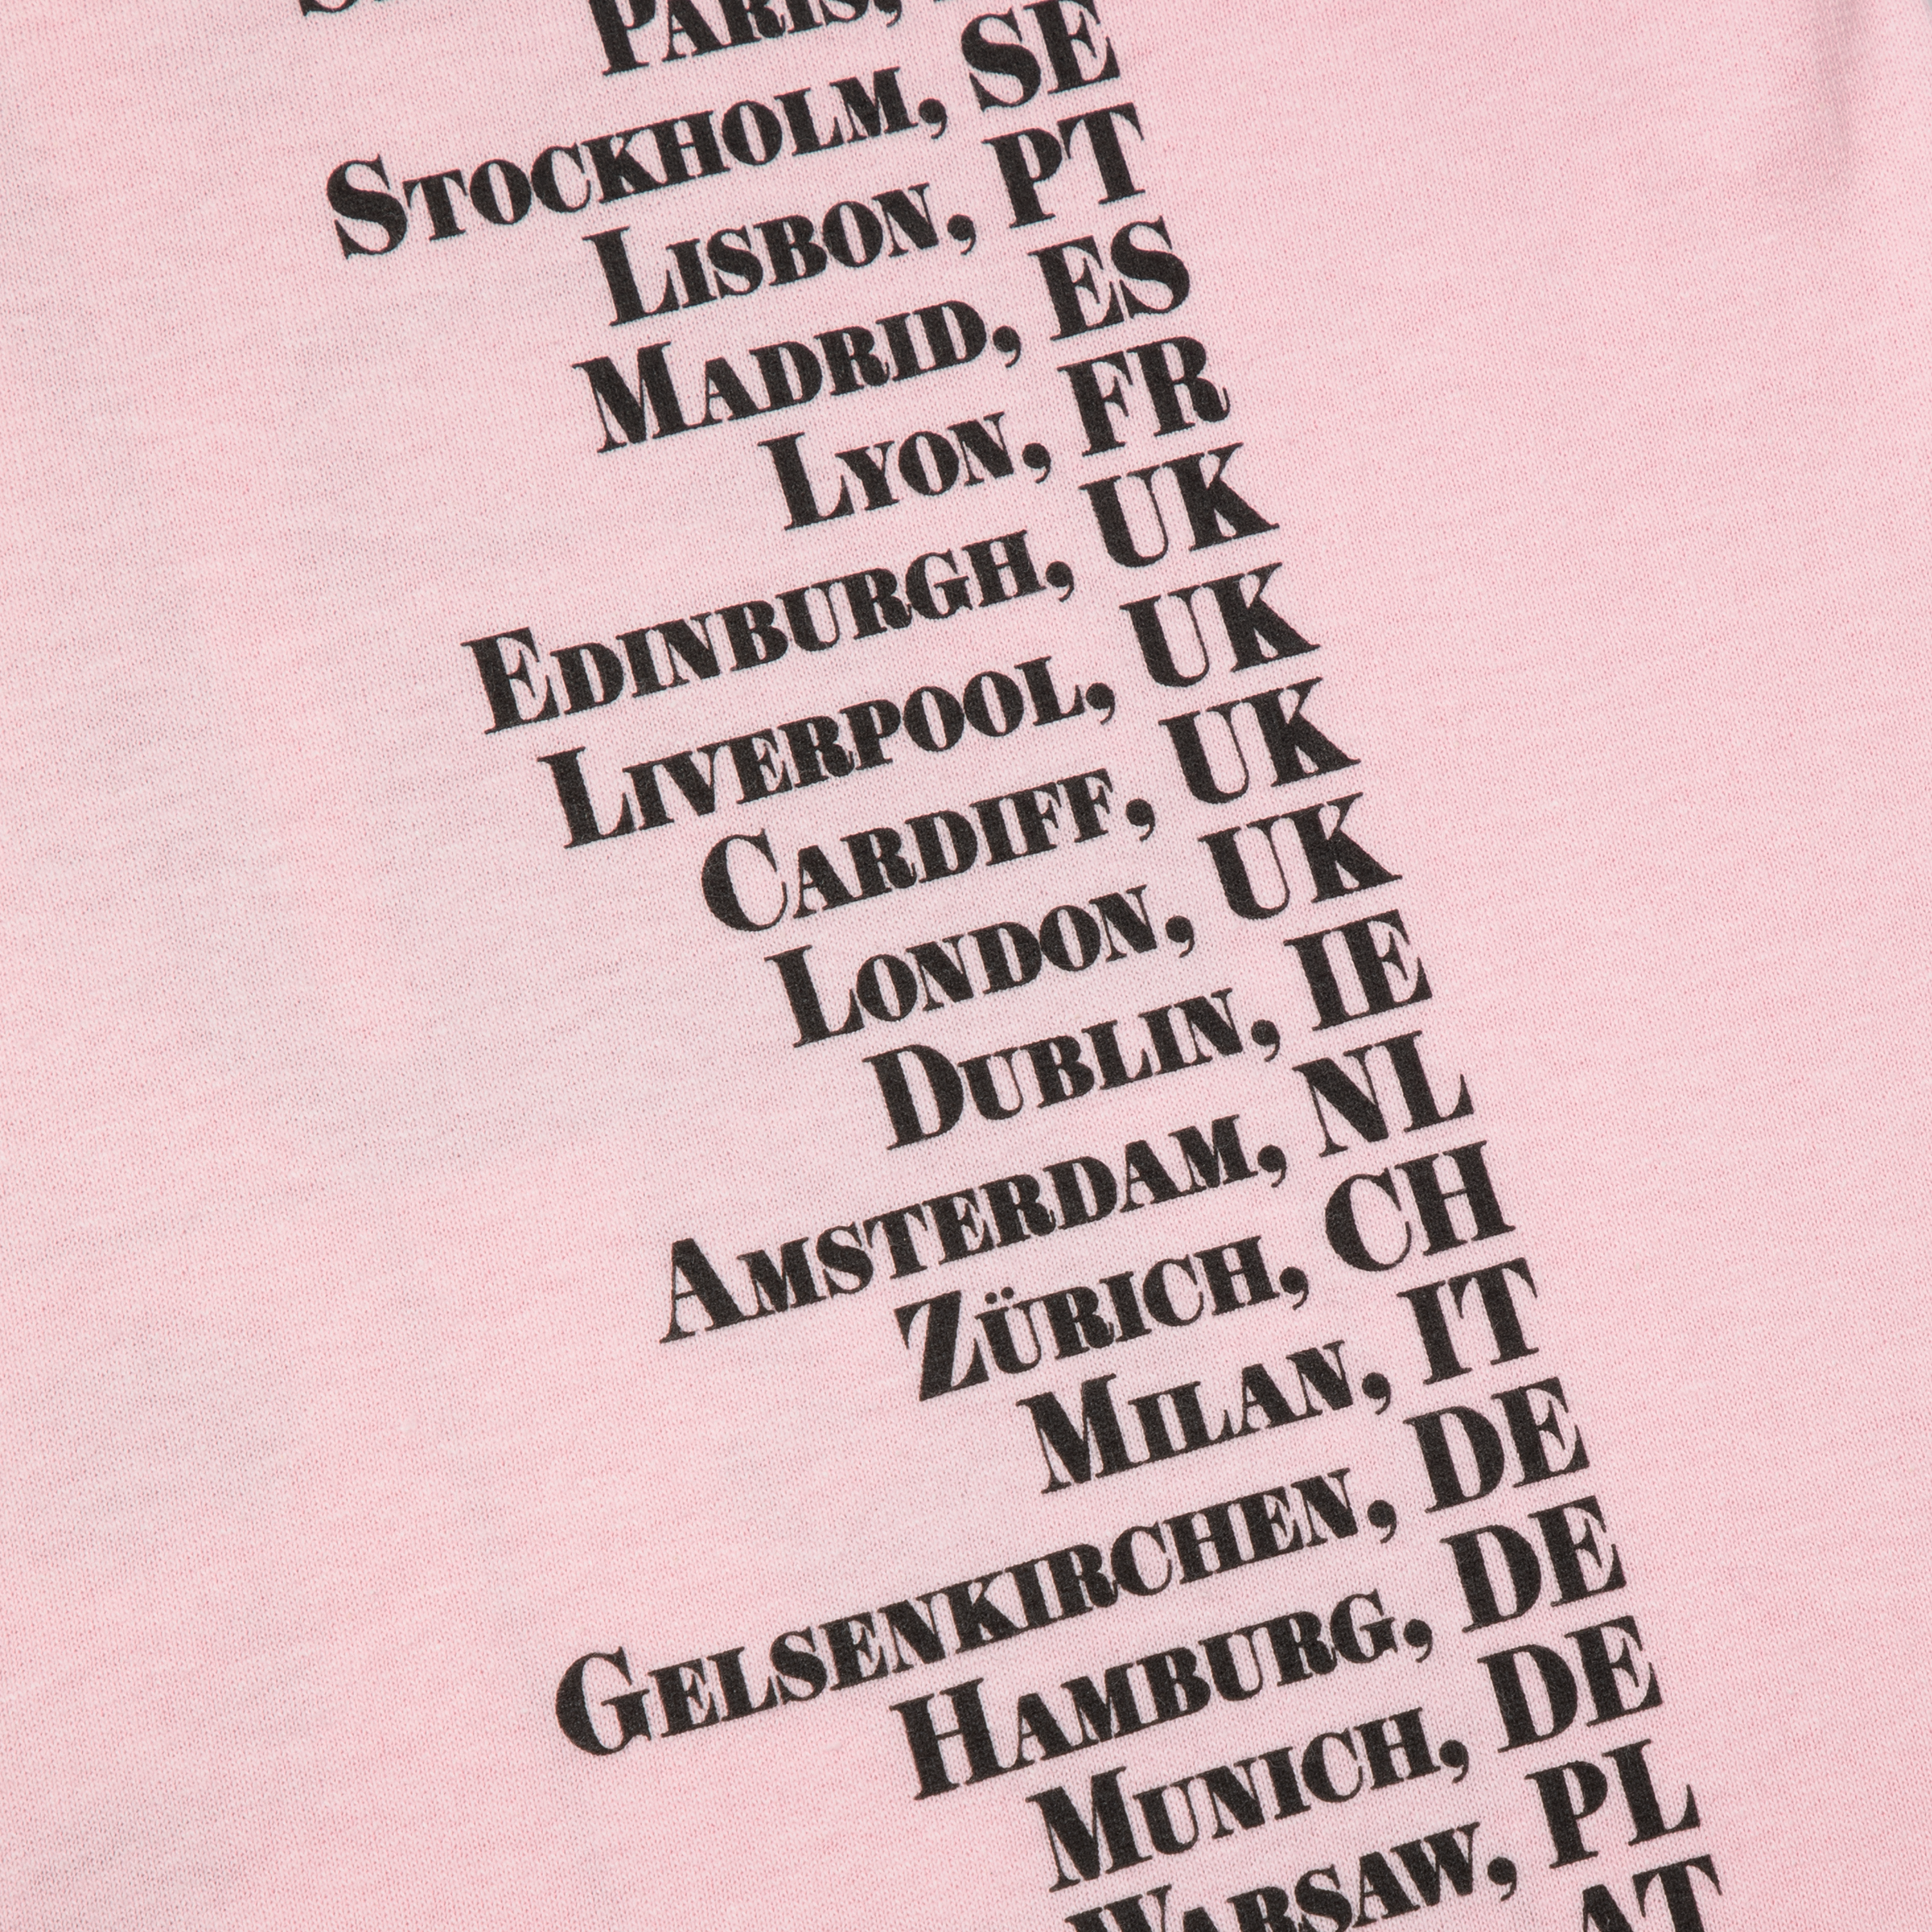 Taylor Swift The Eras Tour Pink T-Shirt